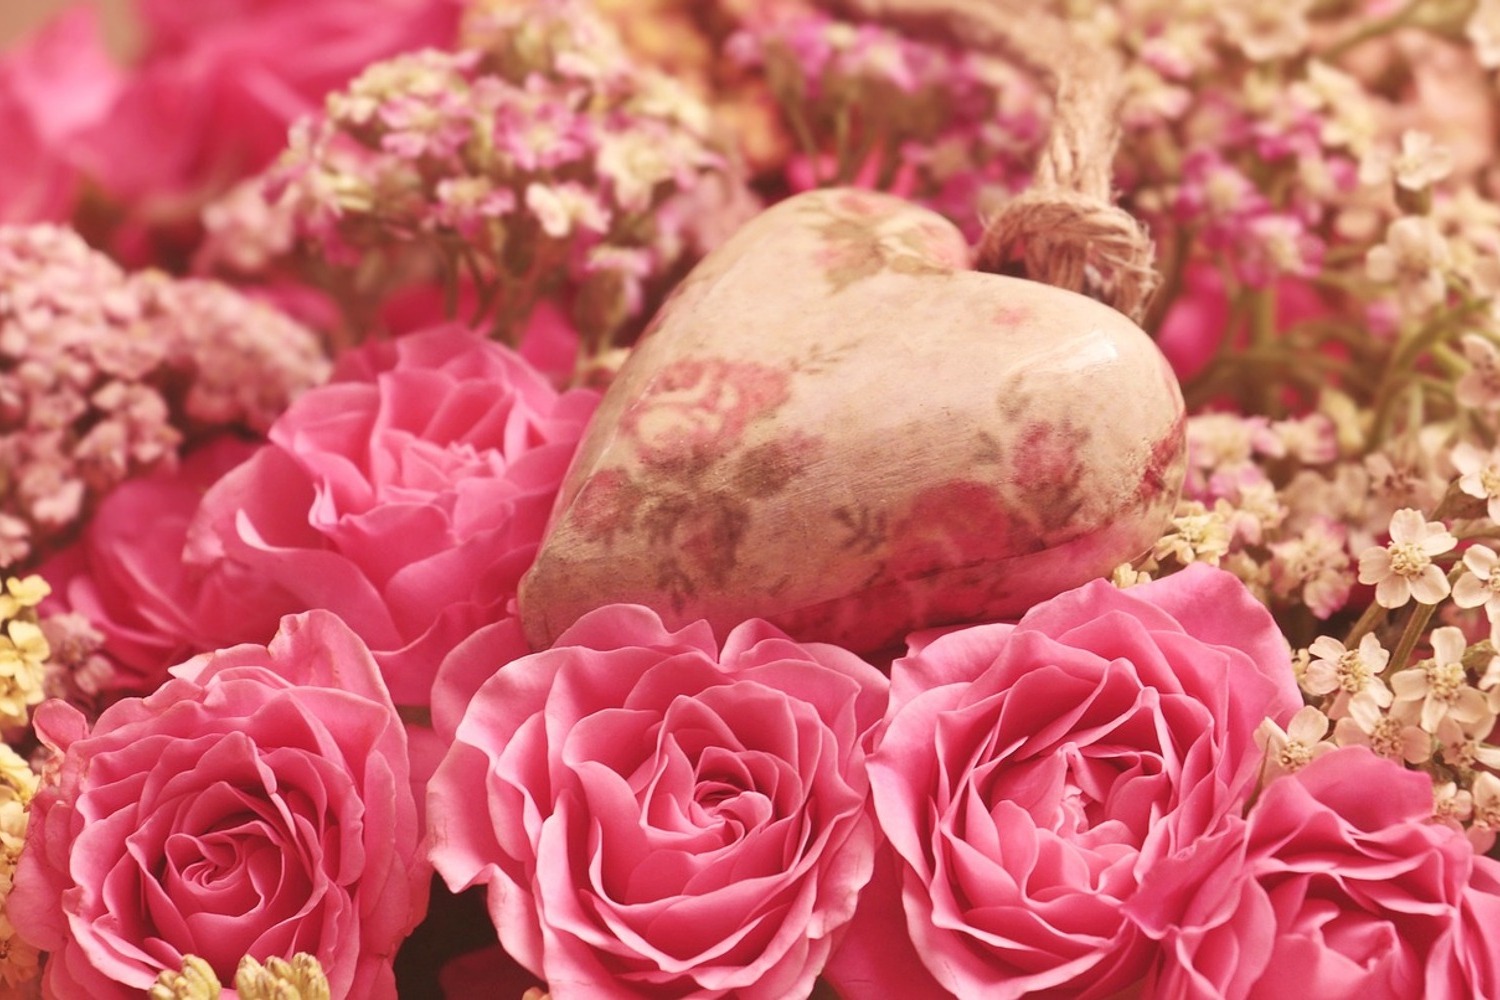 Photo Wallpaper Romantic Roses With Heart - Imagenes Del 14 De Febrero Con Frases - HD Wallpaper 